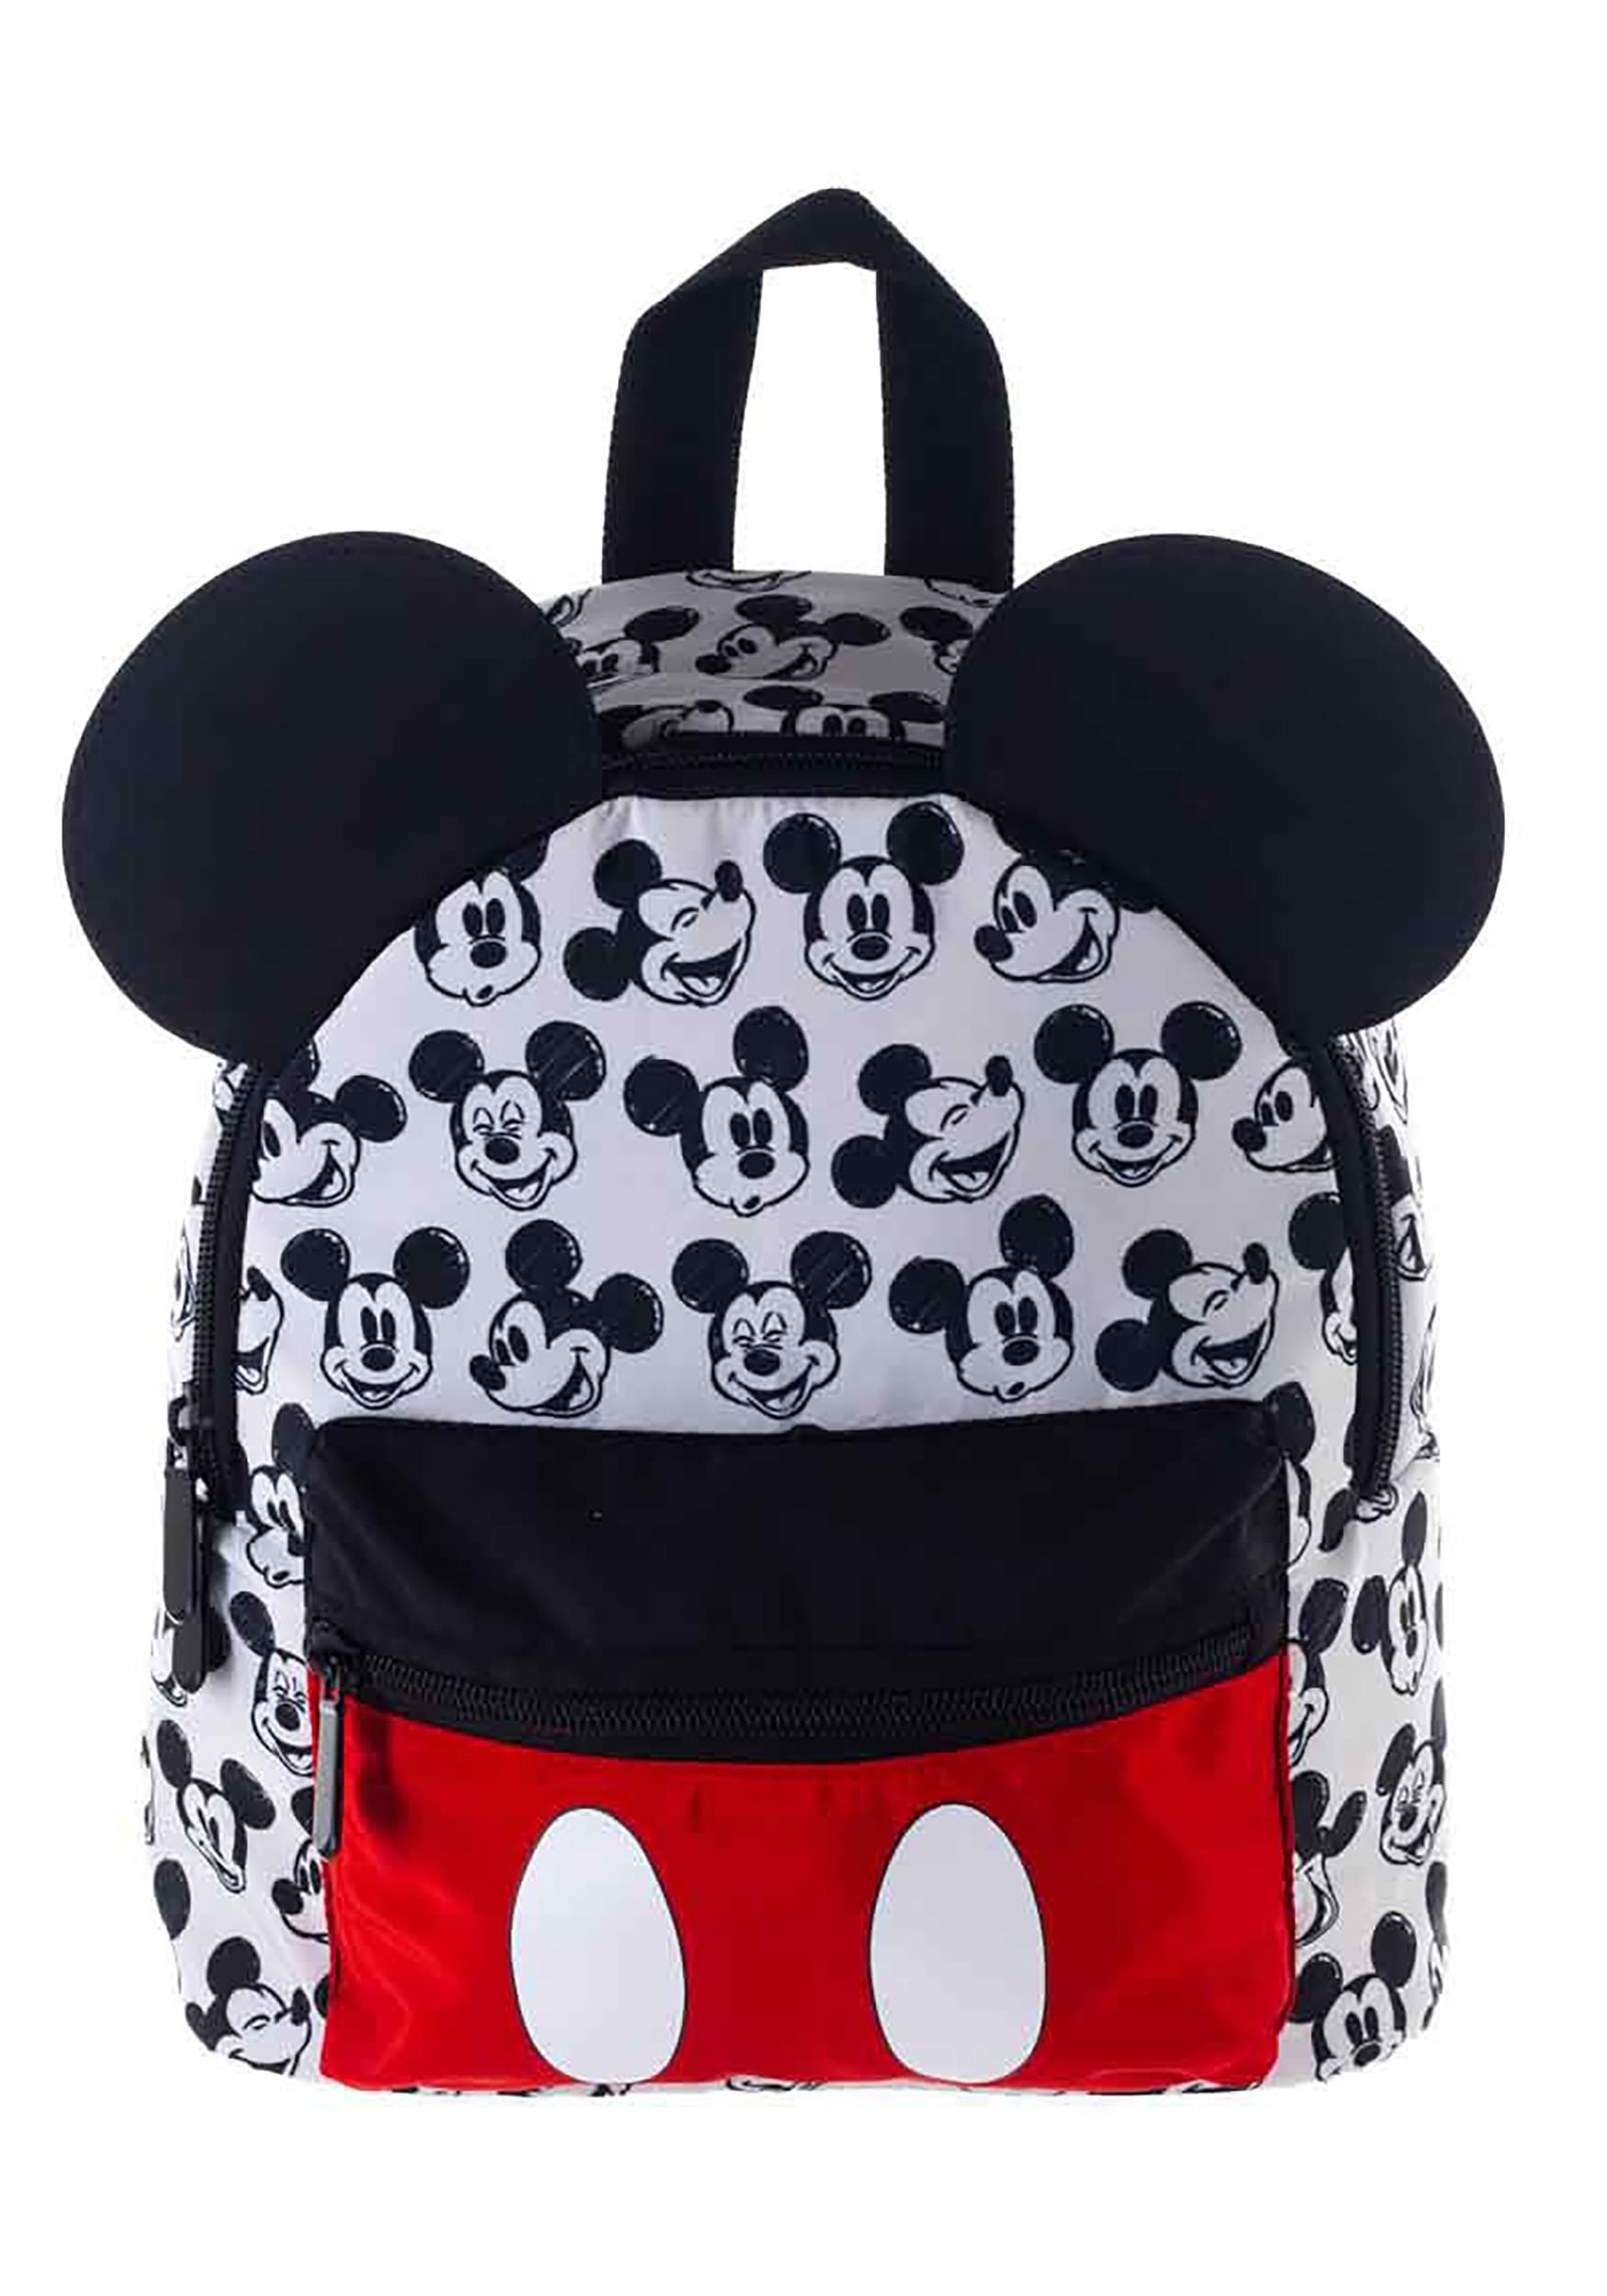 Mickey Mouse Loungefly Mini Backpack - Women's handbags